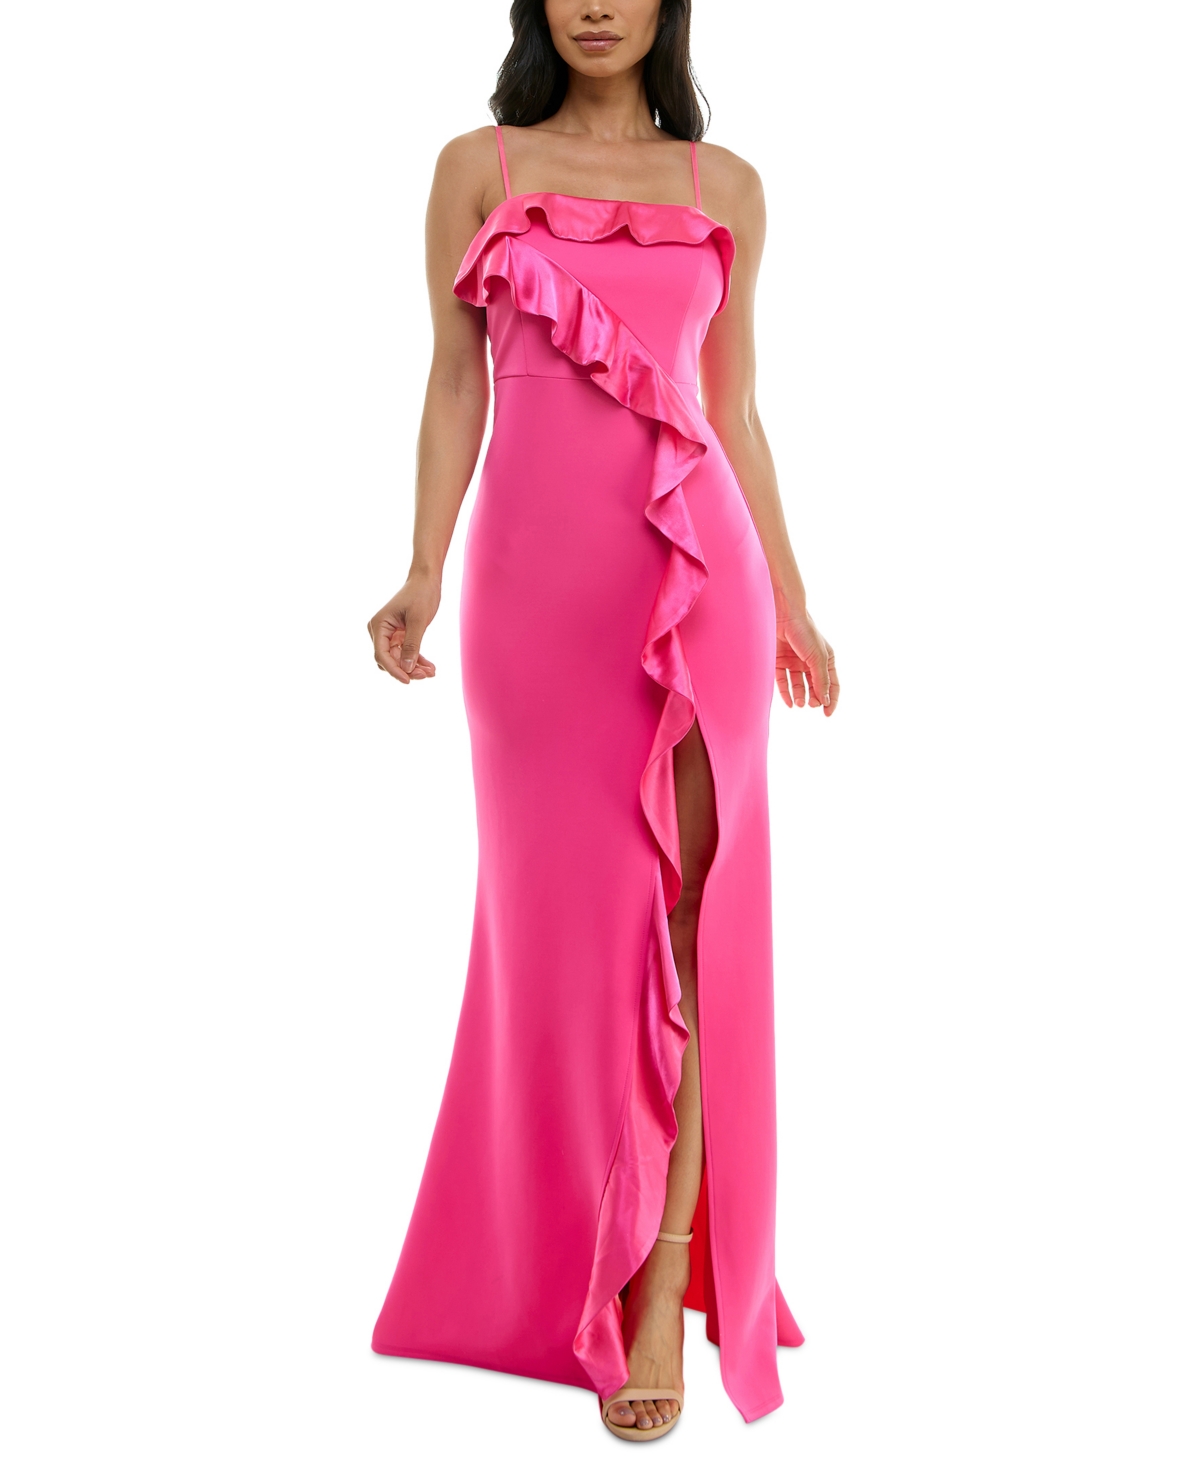 Juniors' Ruffled Sleeveless Gown - Hot Pink